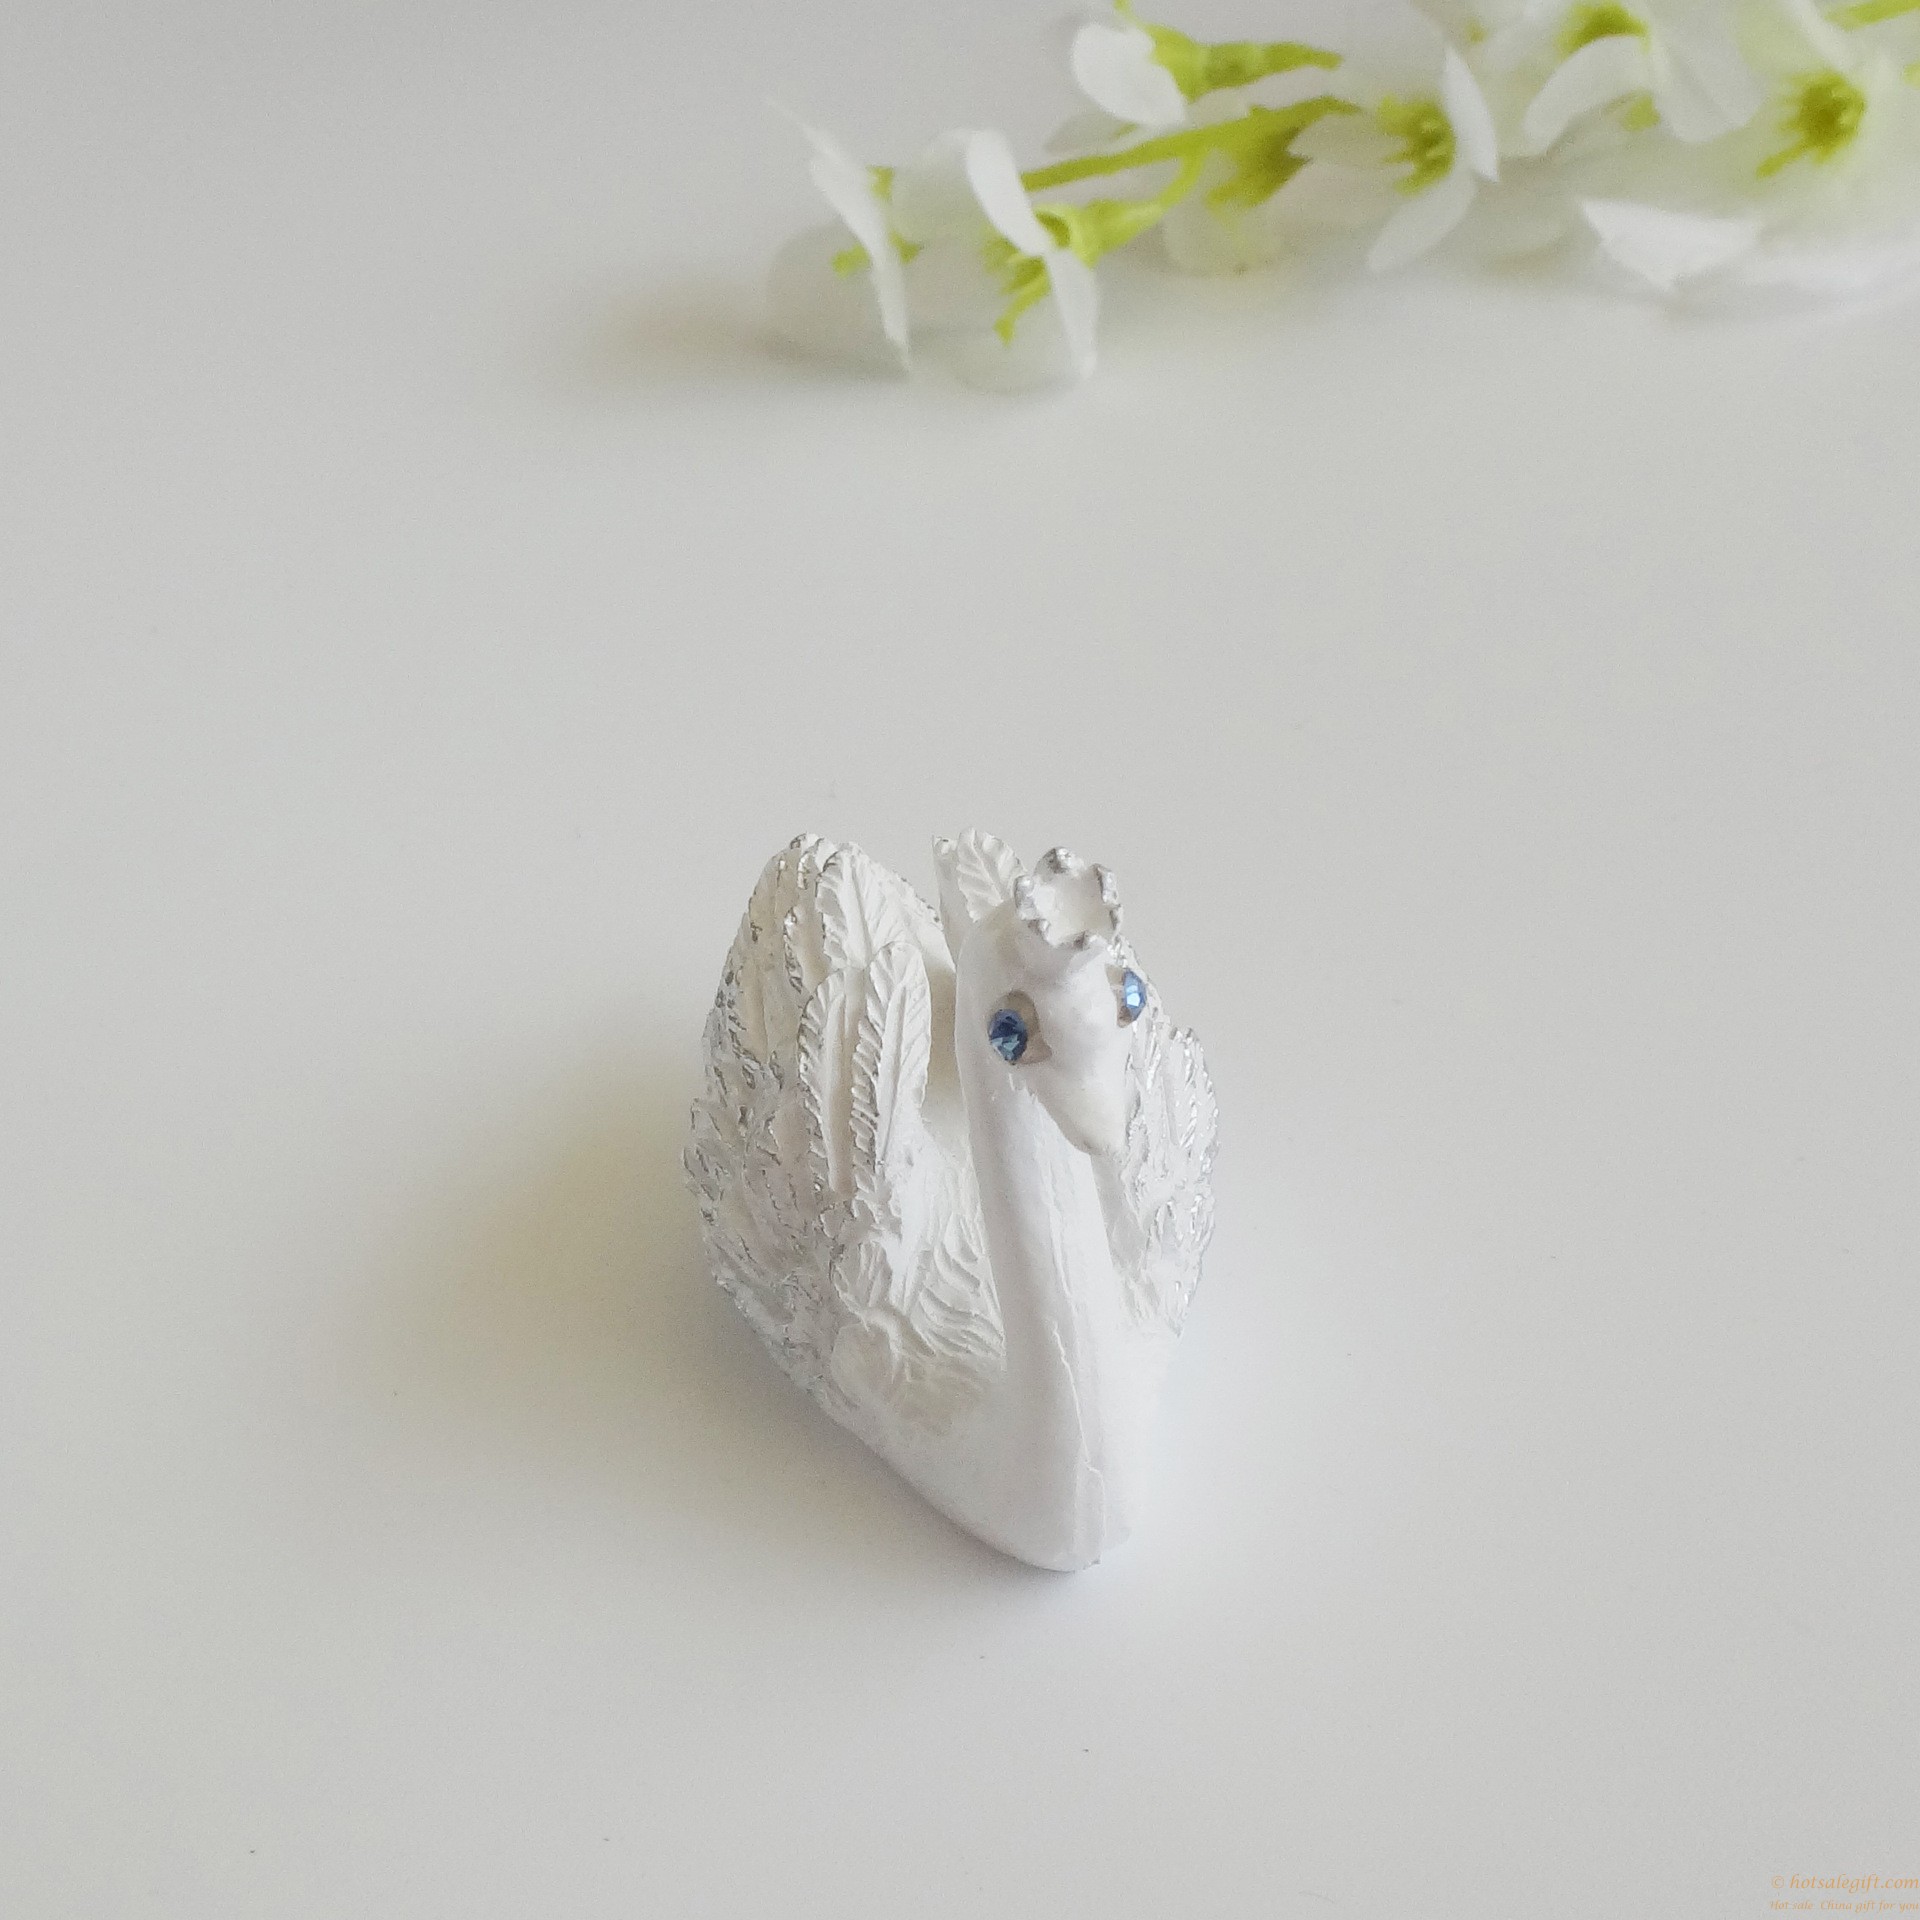 hotsalegift creative resin ornaments swan place card holder wedding favor 2